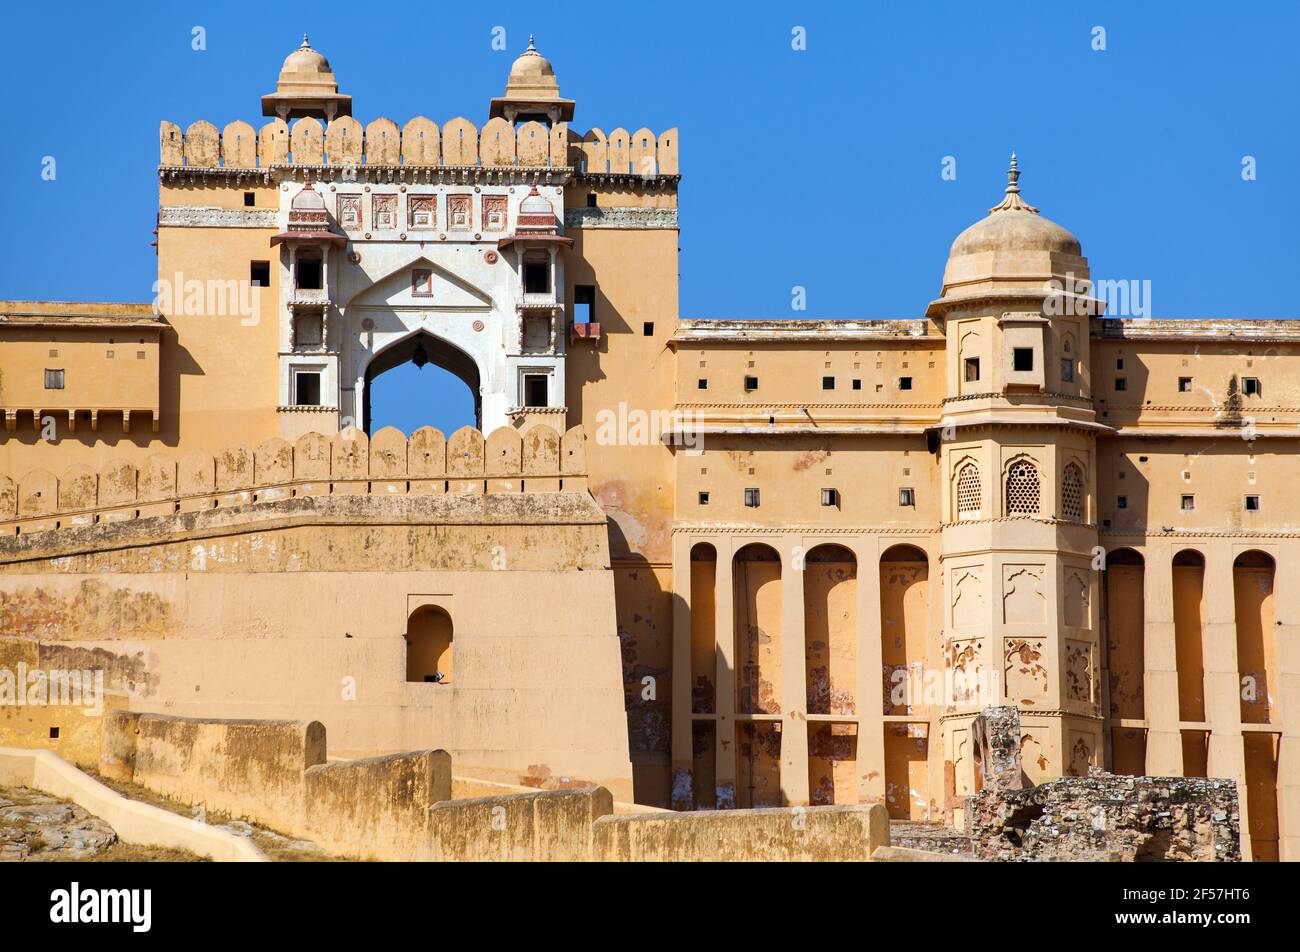 Vista di Amber forte vicino Jaipur città, Rajasthan, India Foto Stock